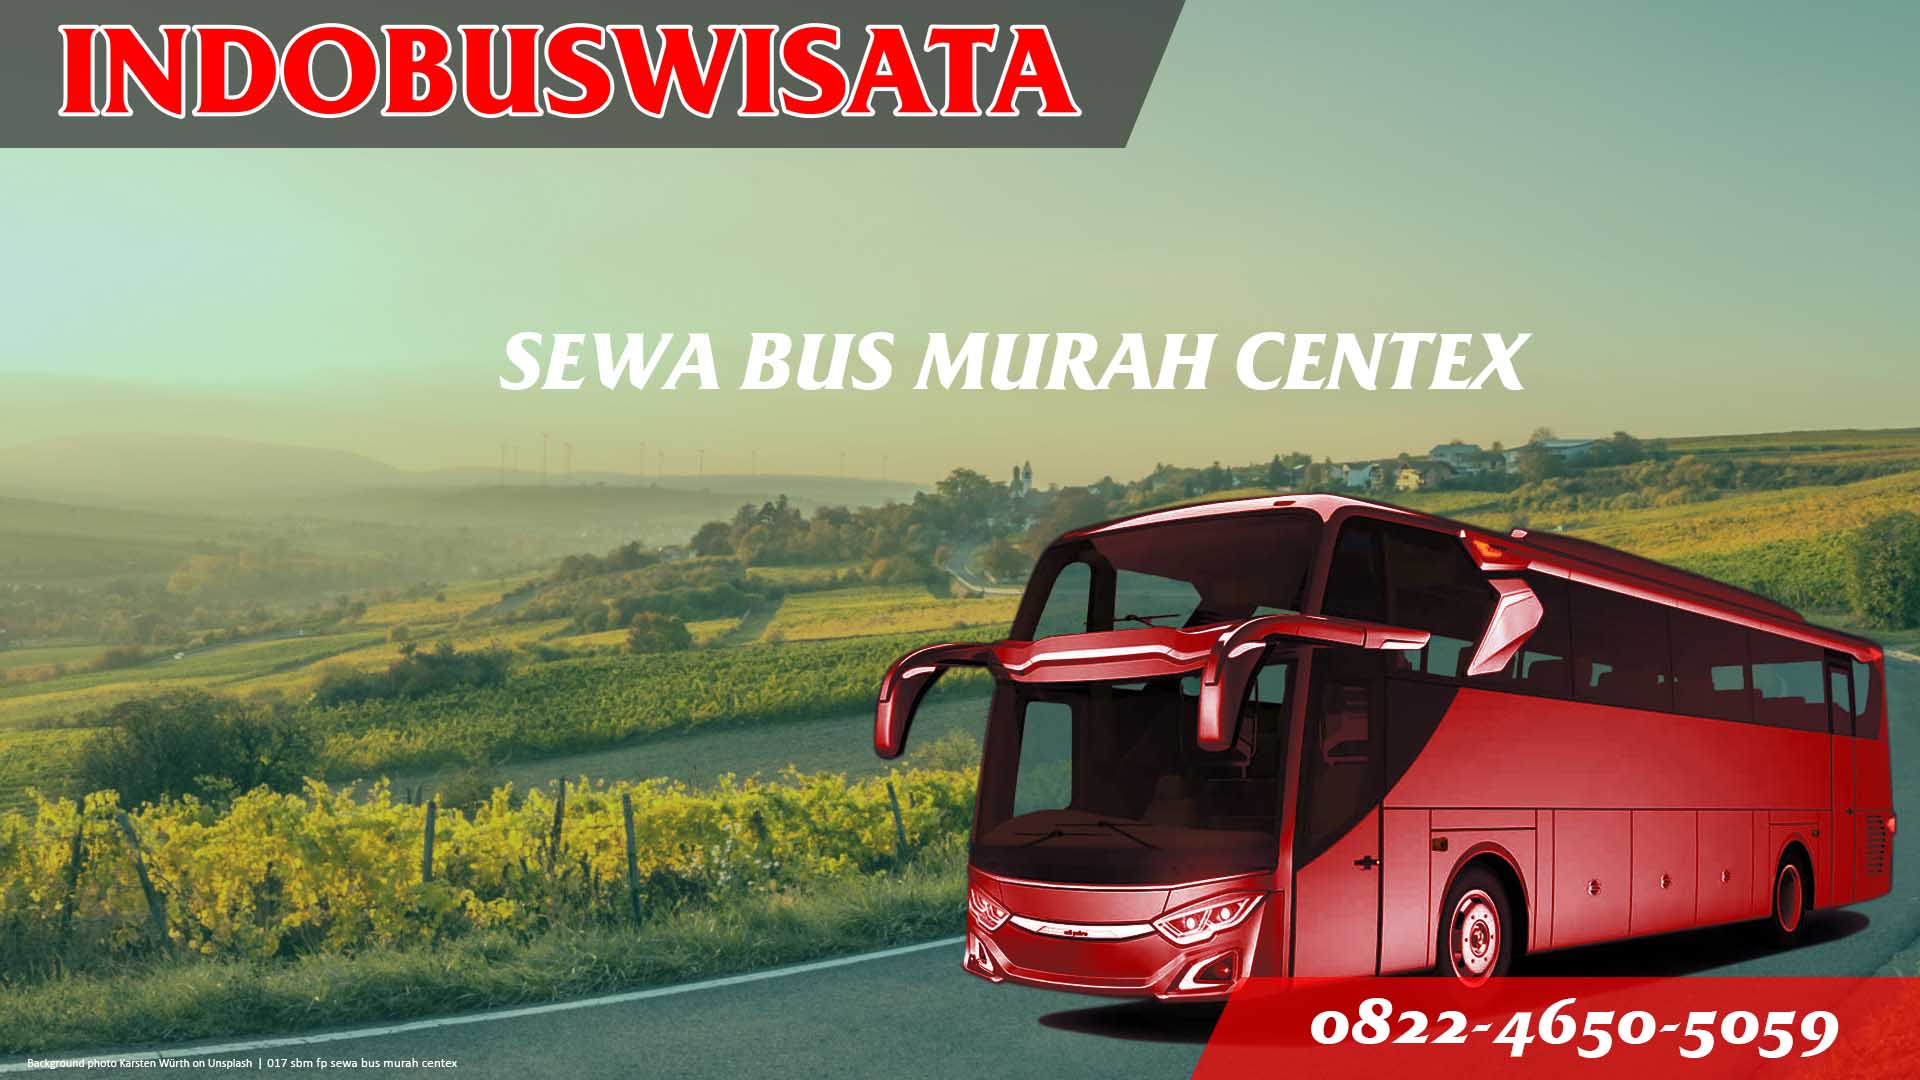 017 Sbm Fp Sewa Bus Murah Centex Jb 3 Hdd Indobuswisata